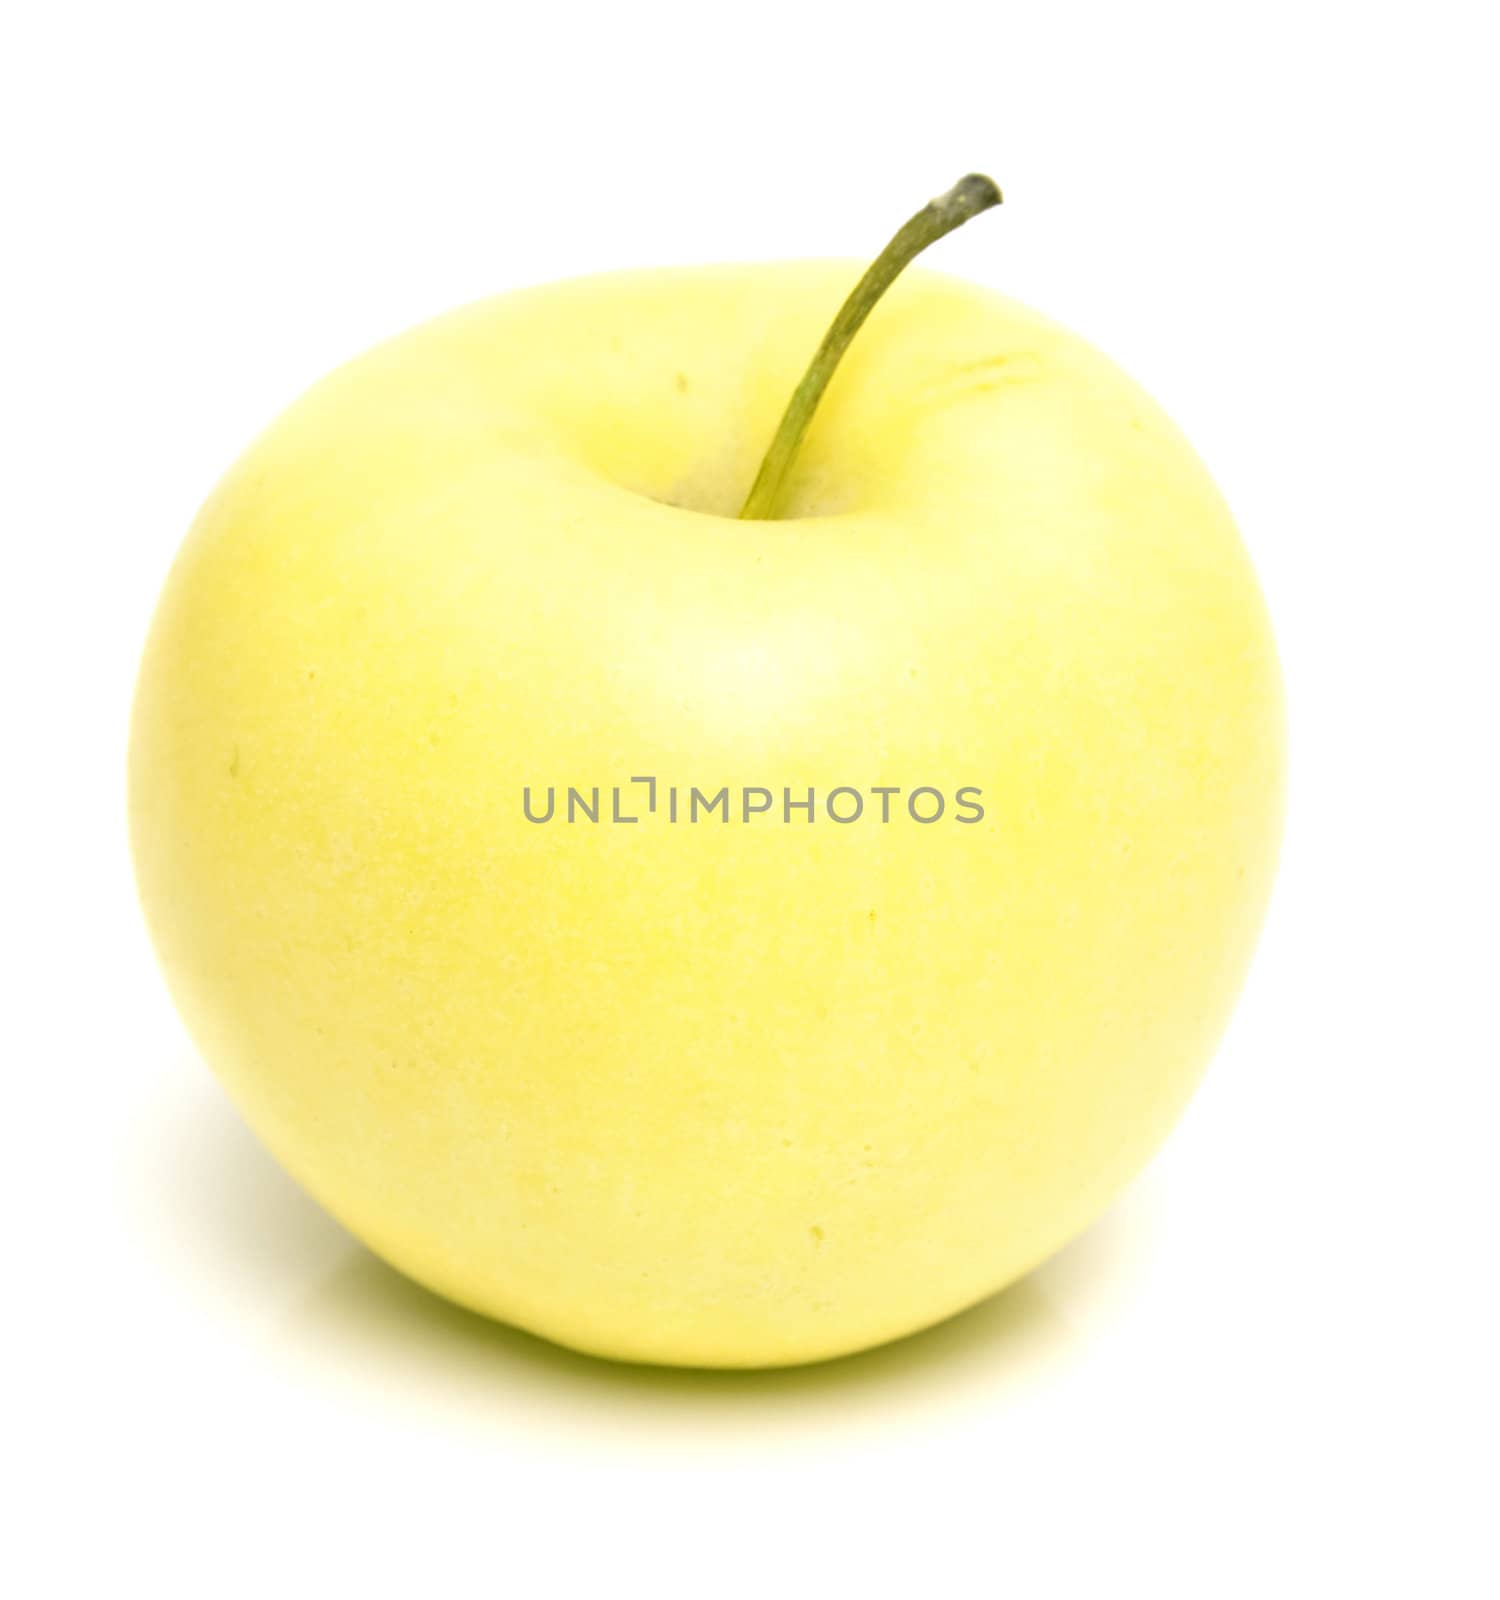 The ripe juicy yellow apple . Isolation on white, shallow DOF.